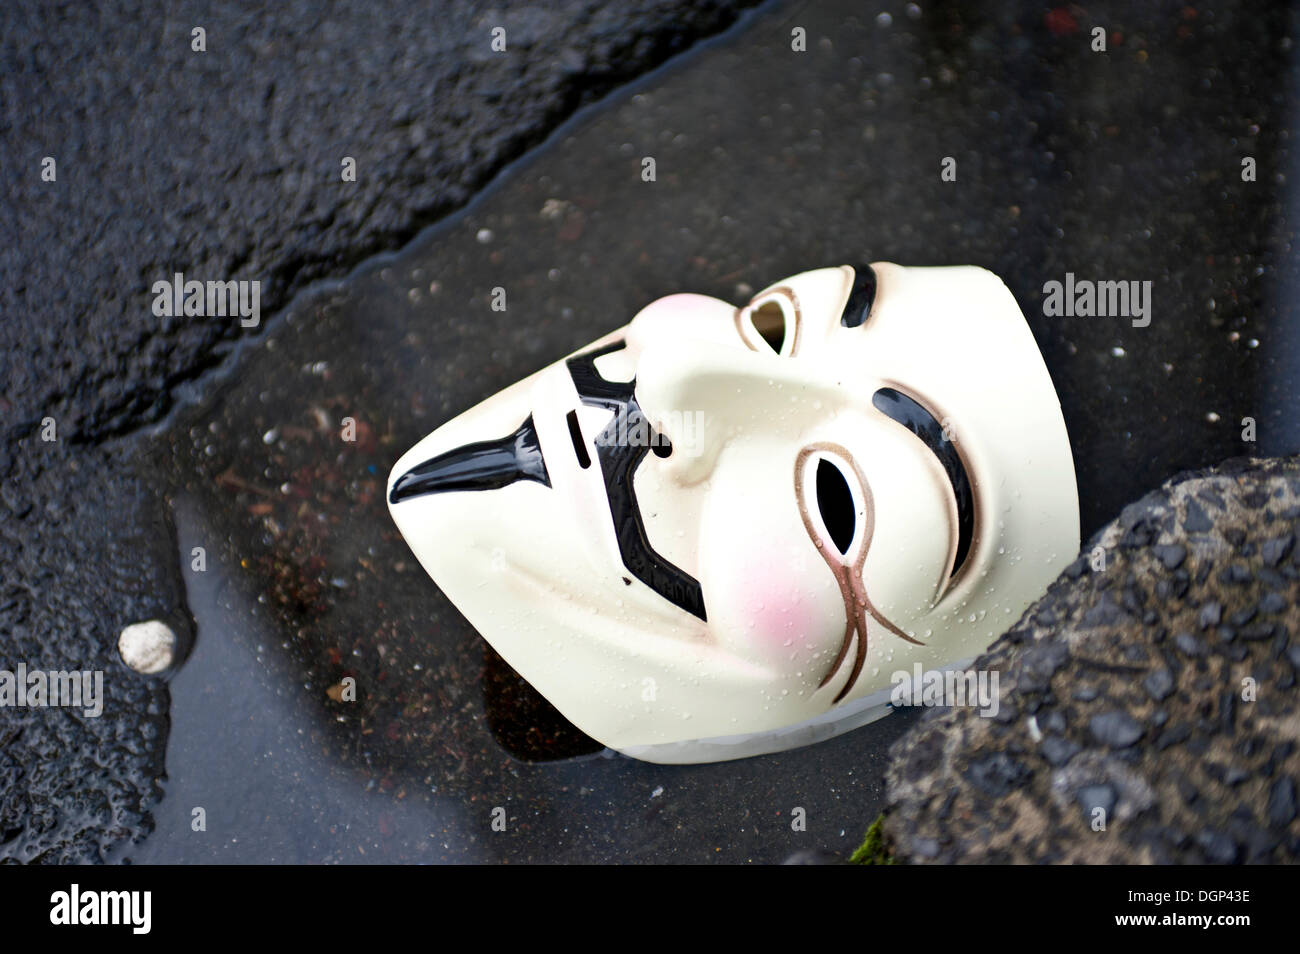 Anonymous mask, Guy Fawkes mask lying discarded on a street, symbolic image Stock Photo